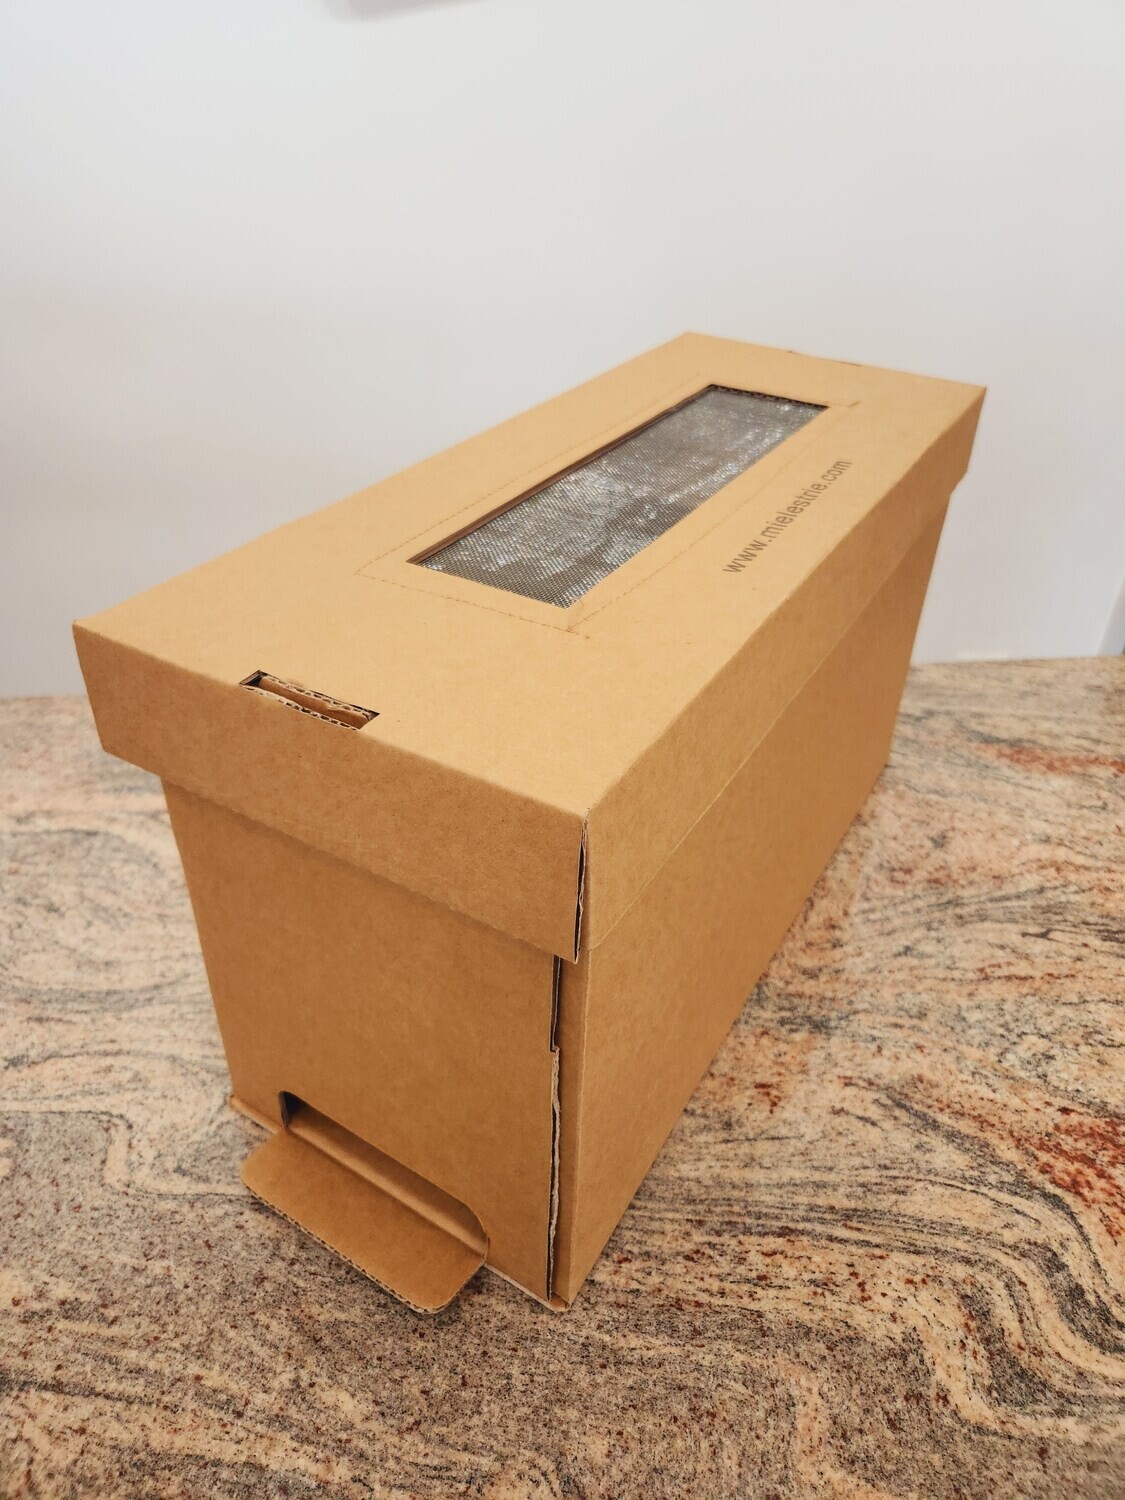 Cardboard Nuc Box vented